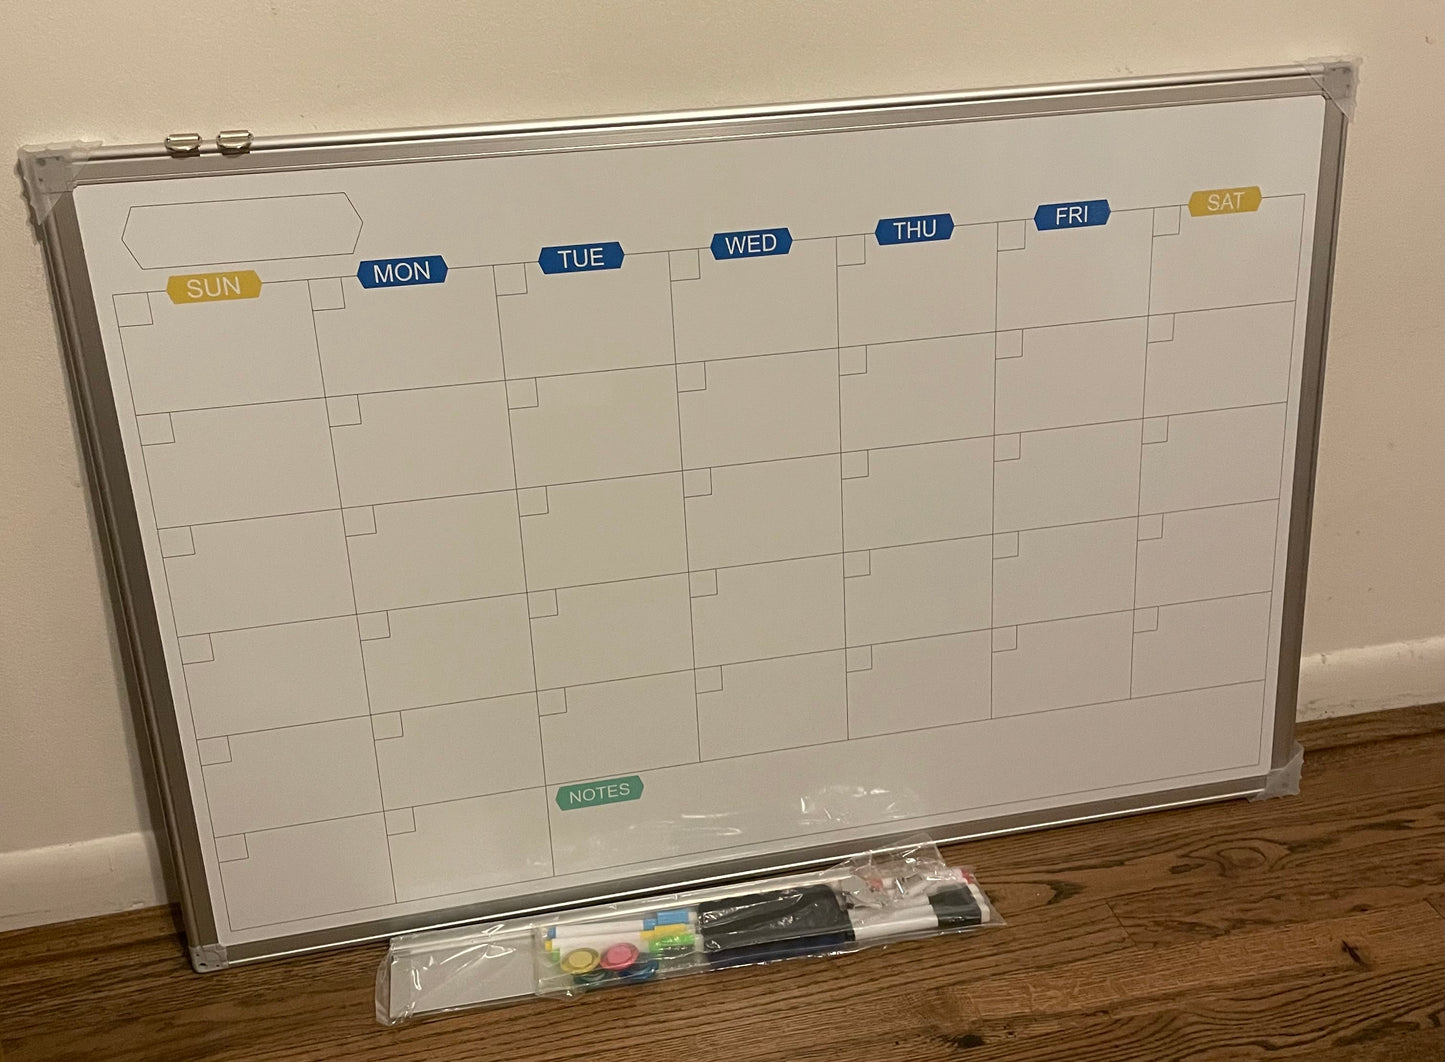 New Dry erase calendar whiteboard 36”x24” wall hanging.